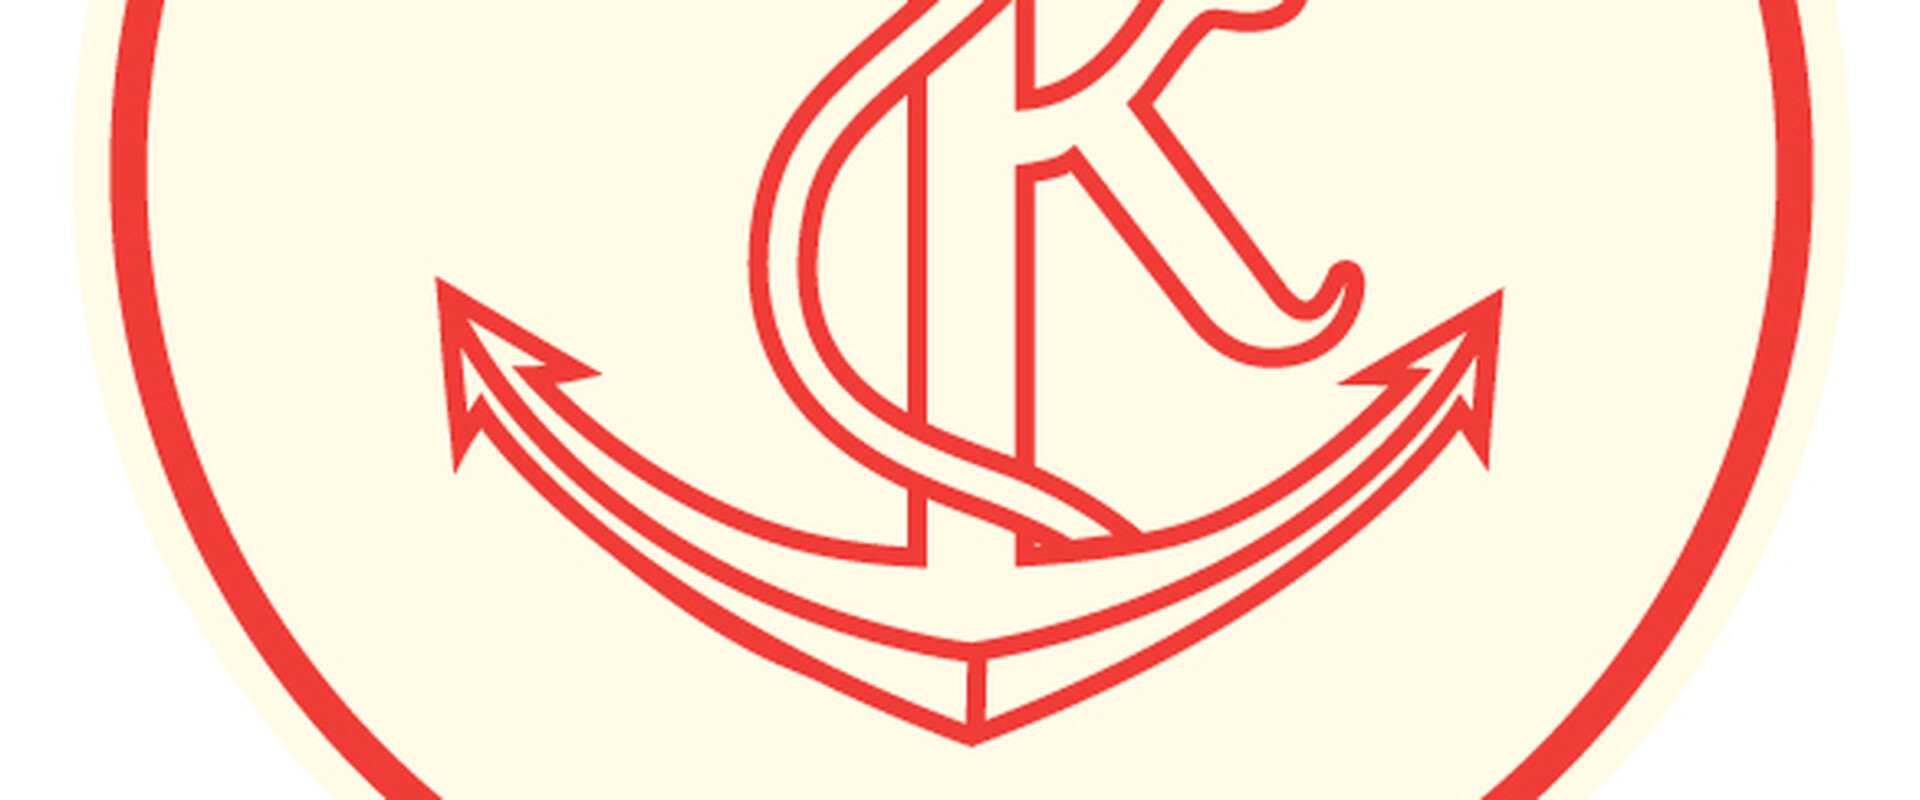 Kristiinankaupunki logo pun nega rgb9